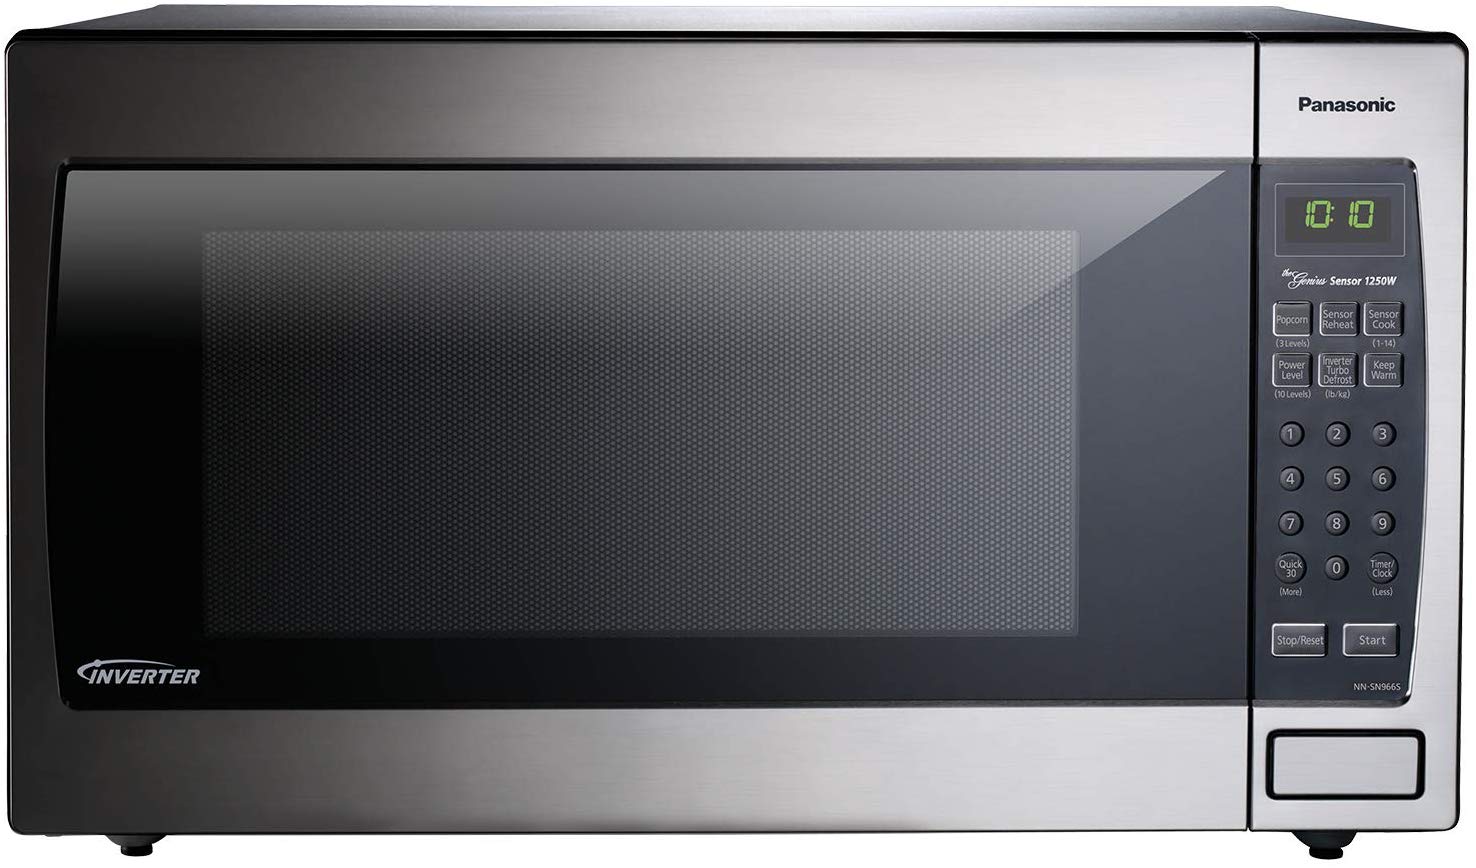 Panasonic SN966S Smart Countertop Microwave